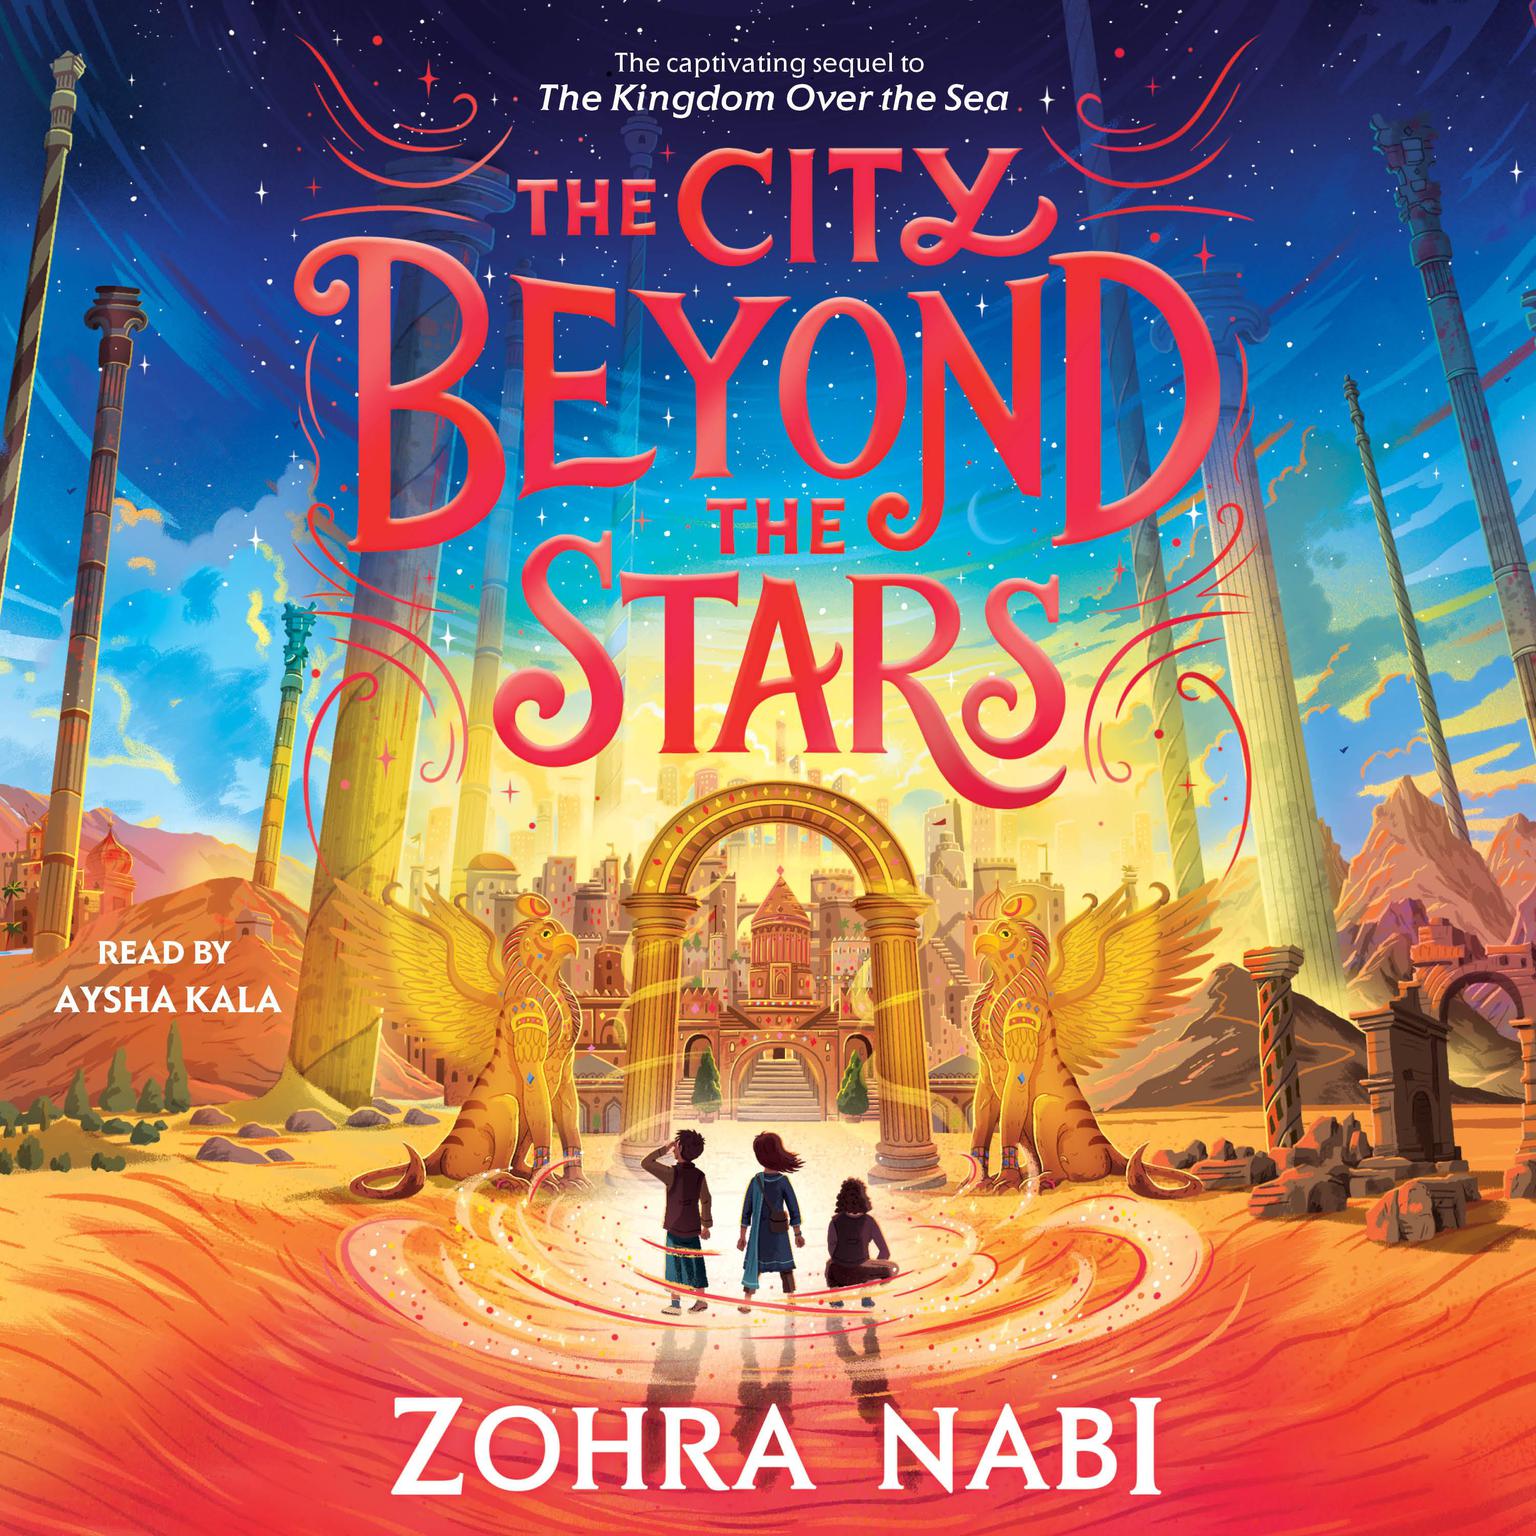 The City Beyond the Stars Audiobook, by Zohra Nabi